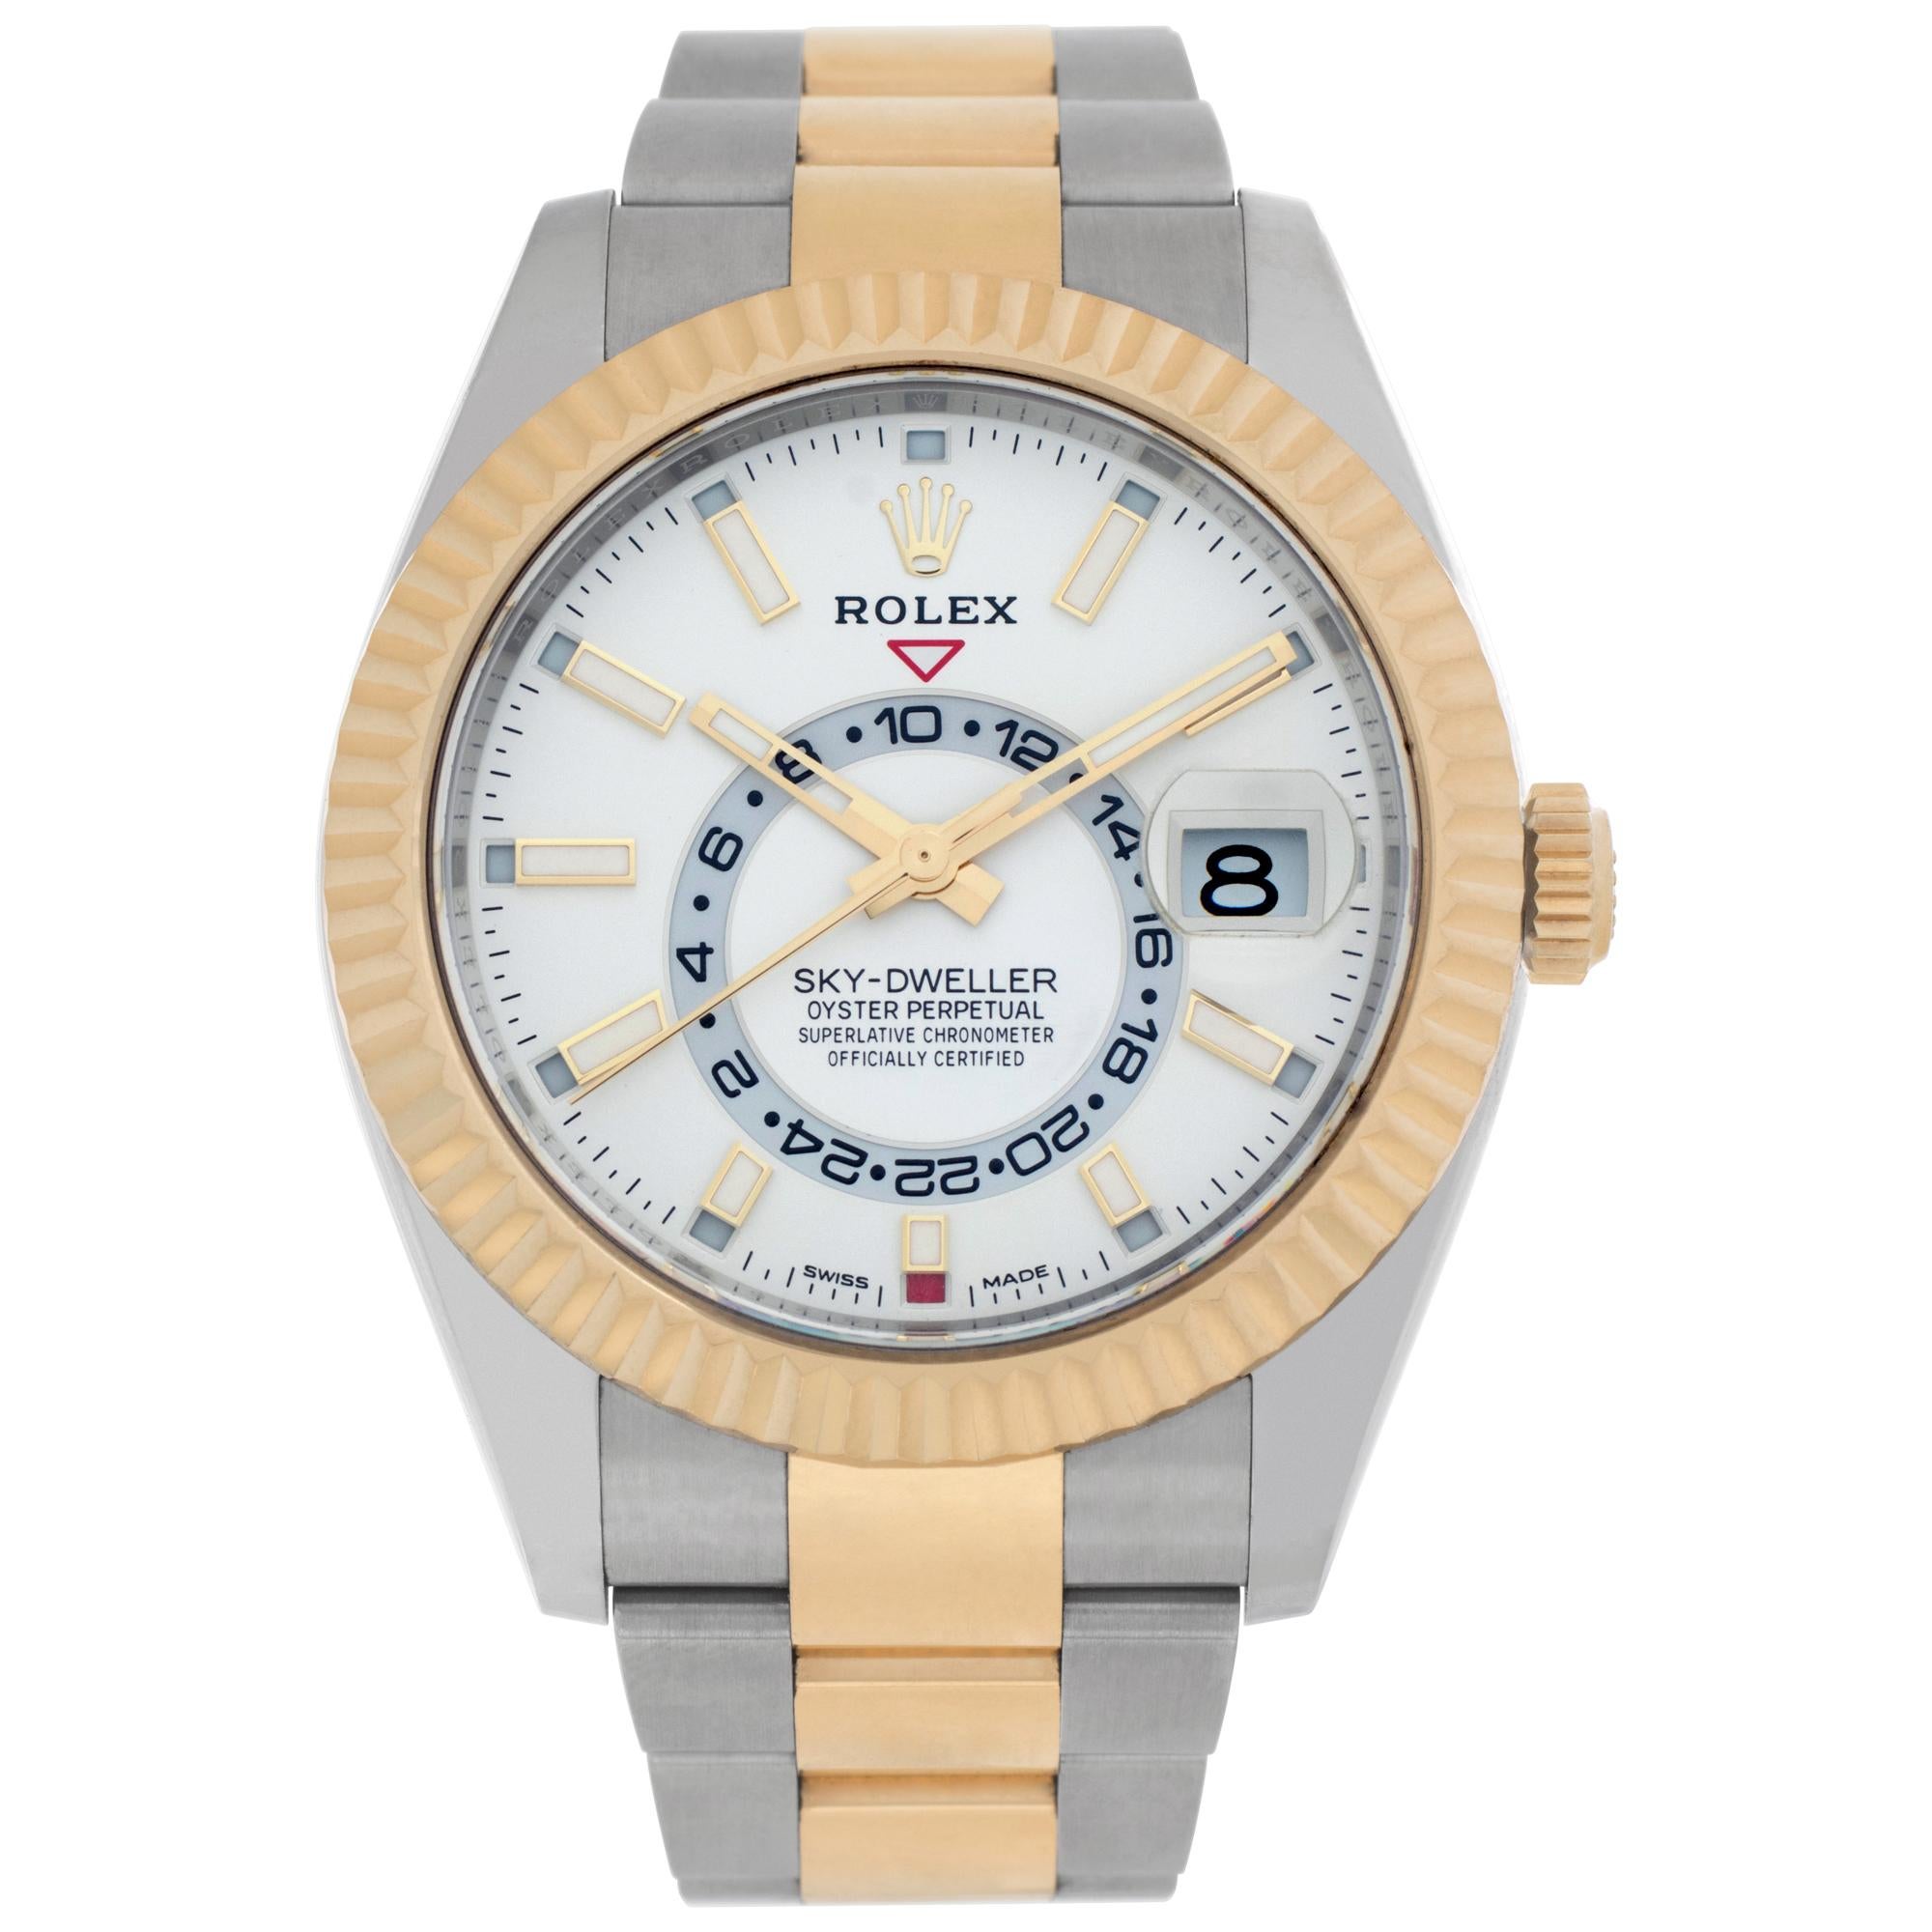 Rolex Sky-Dweller 18k Gold & Stainless Steel Automatic Wristwatch Ref 326933